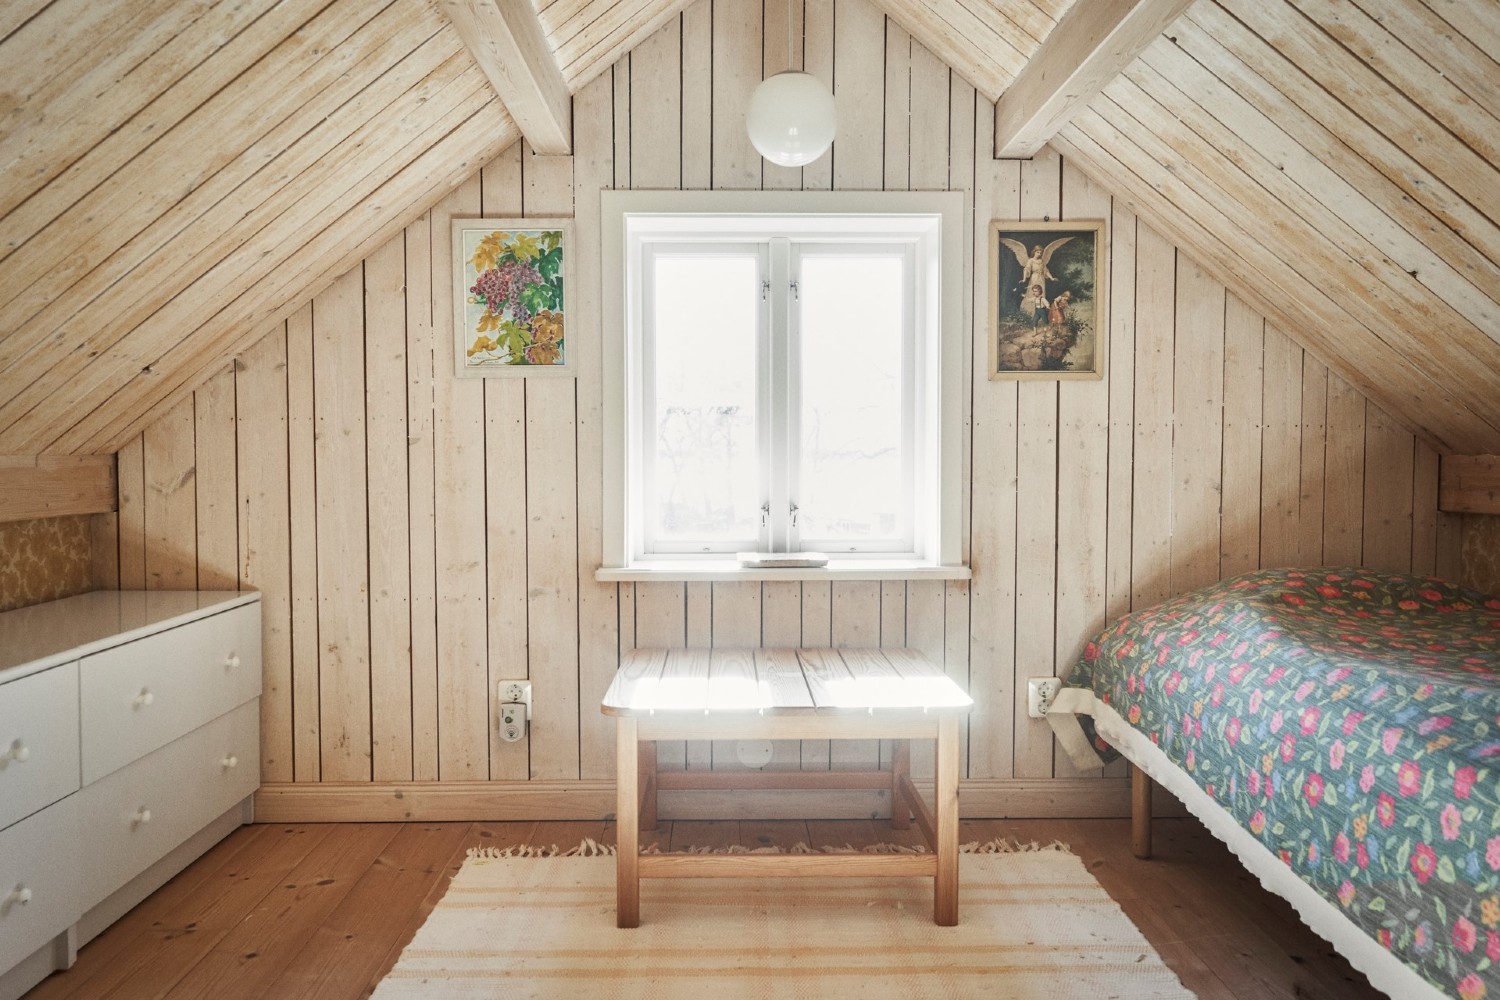 sovloft ( extra säng kan placeras här)/ Sleeping loft (2 beds could be placed here) 